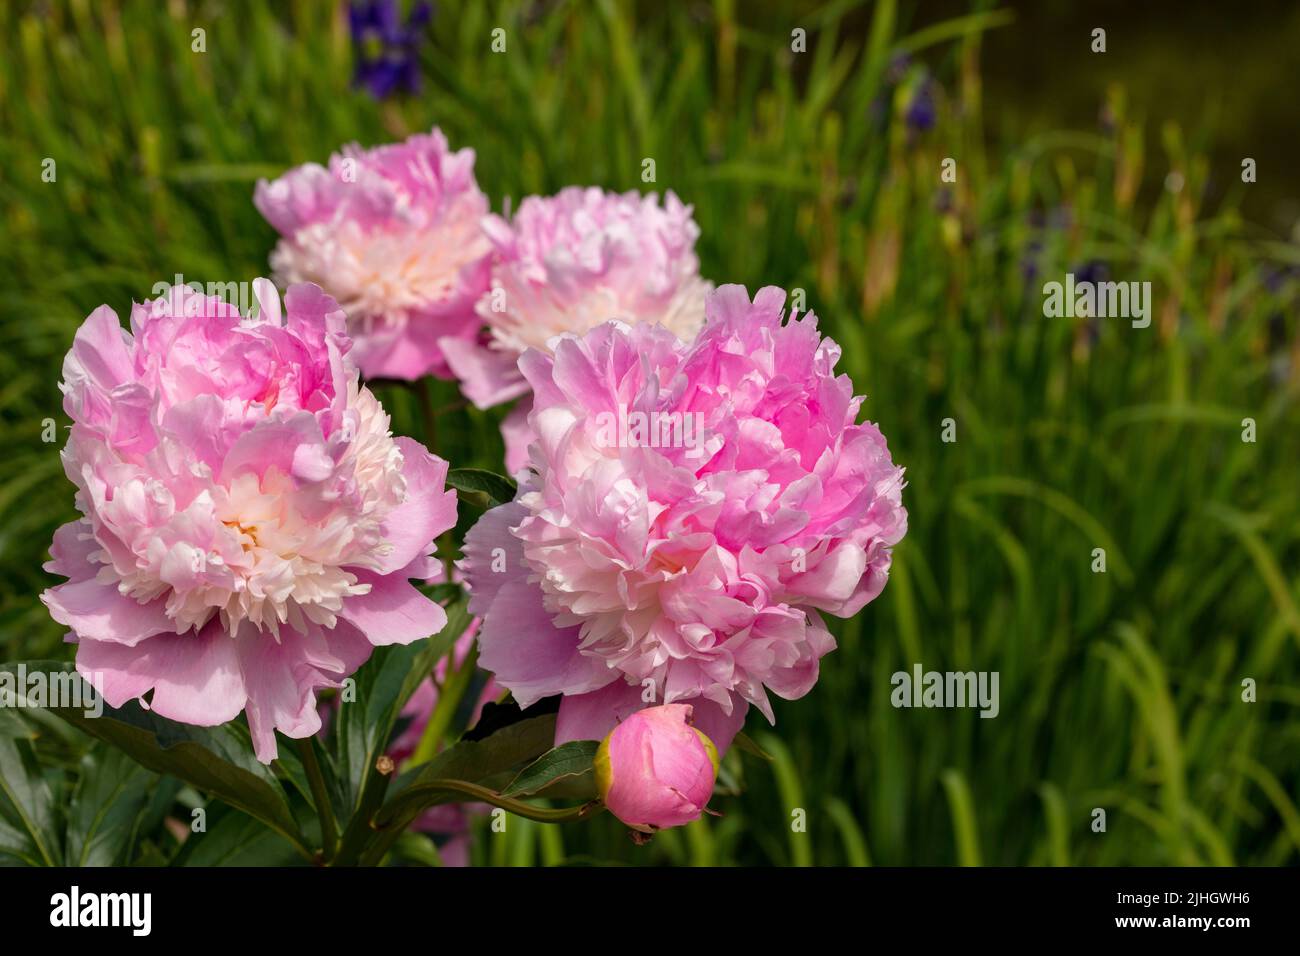 Attractively ruffled Paeonia Lactiflora 'Monsieur Jules Elie’, natural flower portrait Stock Photo